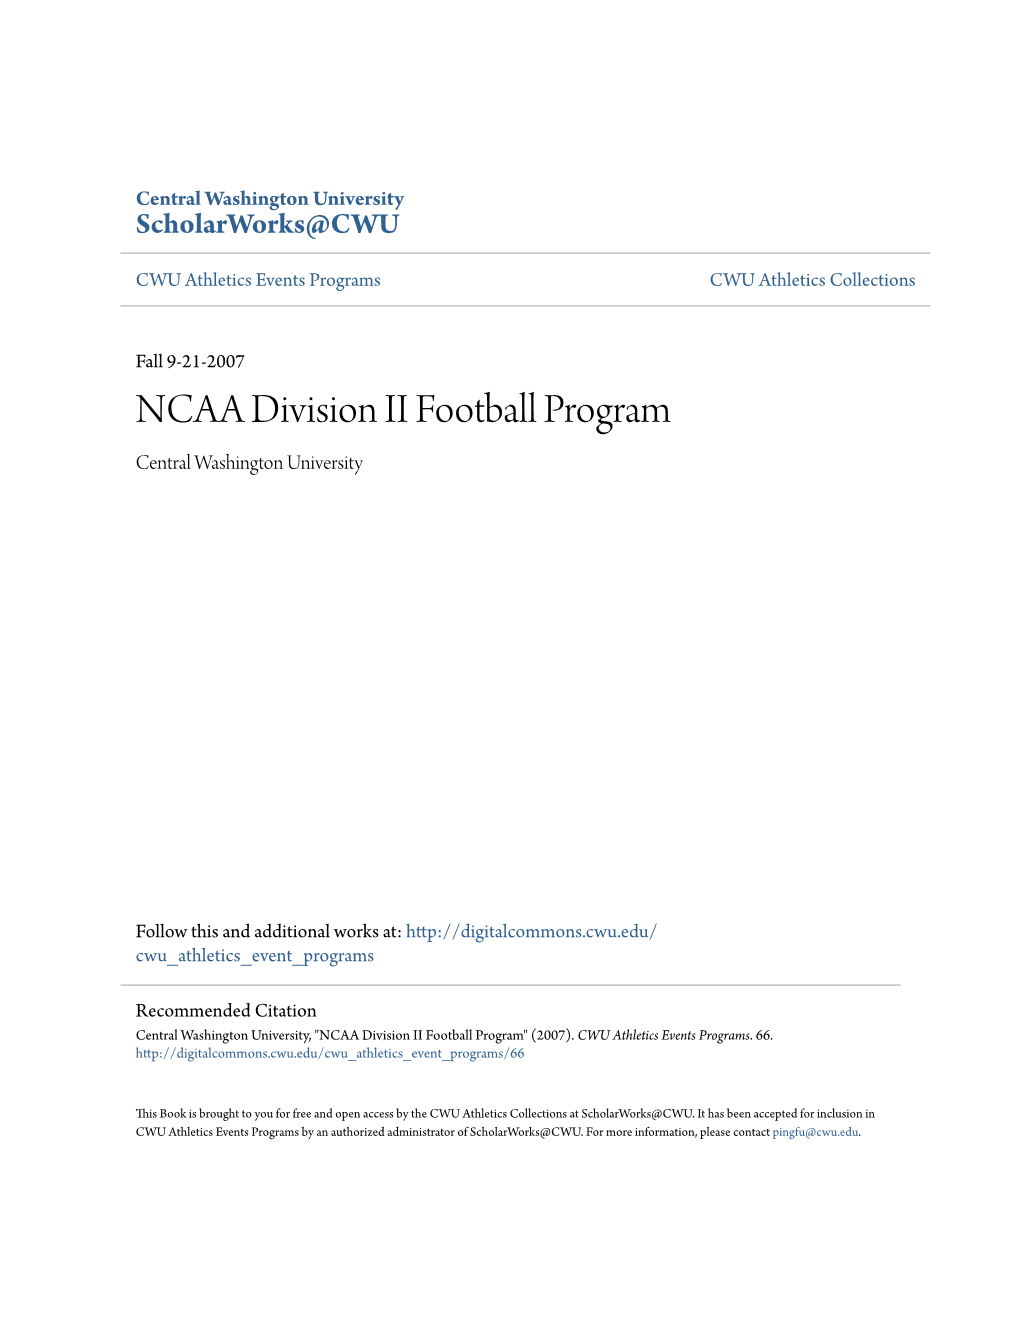 NCAA Division II Football Program Central Washington University